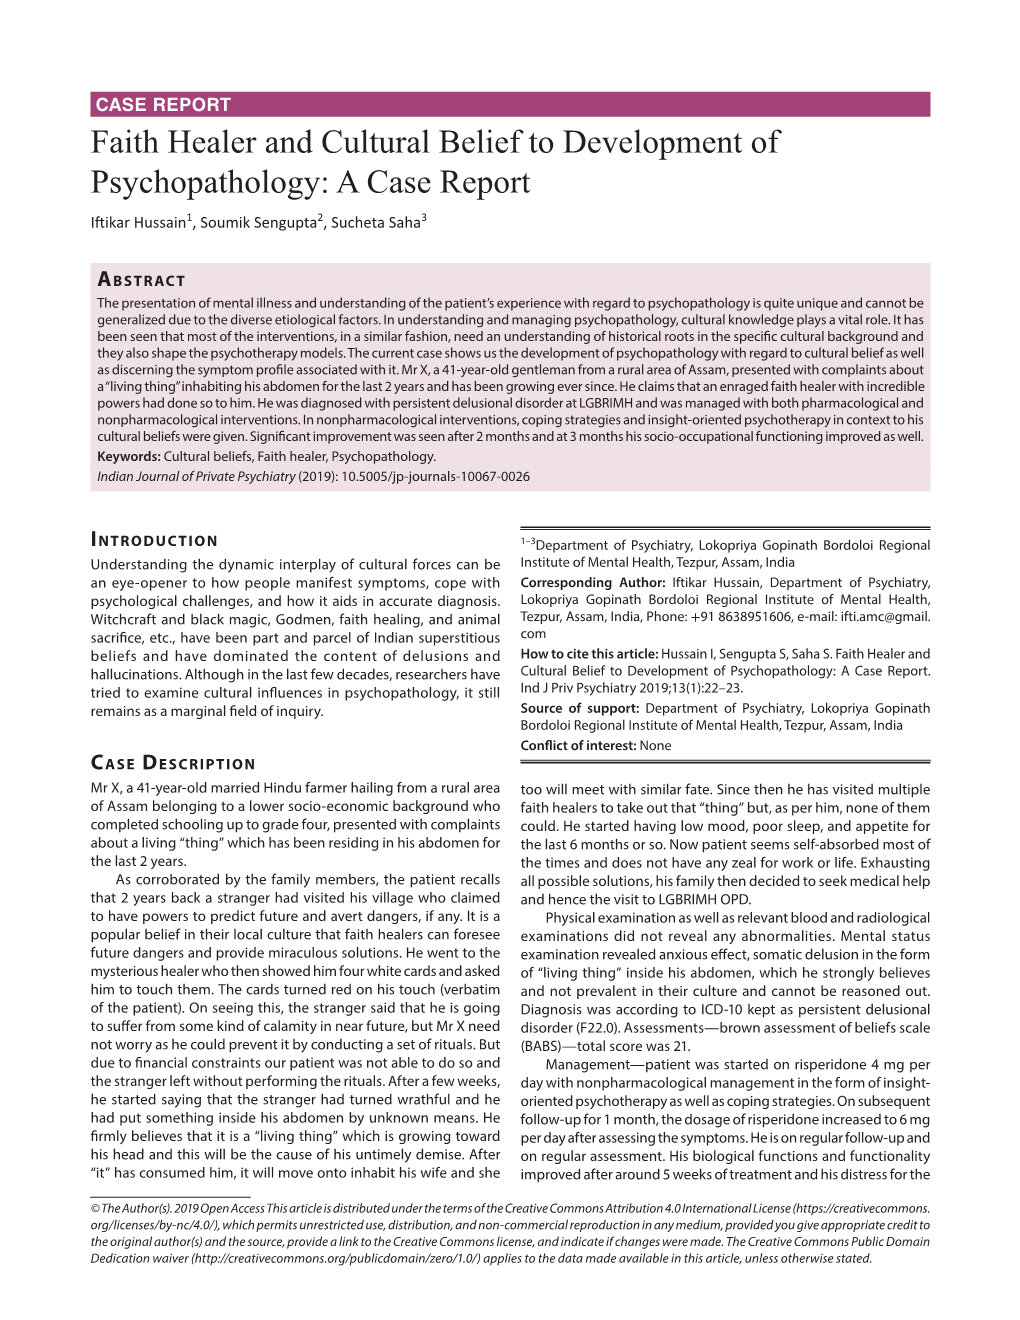 Faith Healer and Cultural Belief to Development of Psychopathology: a Case Report Iftikar Hussain1, Soumik Sengupta2, Sucheta Saha3